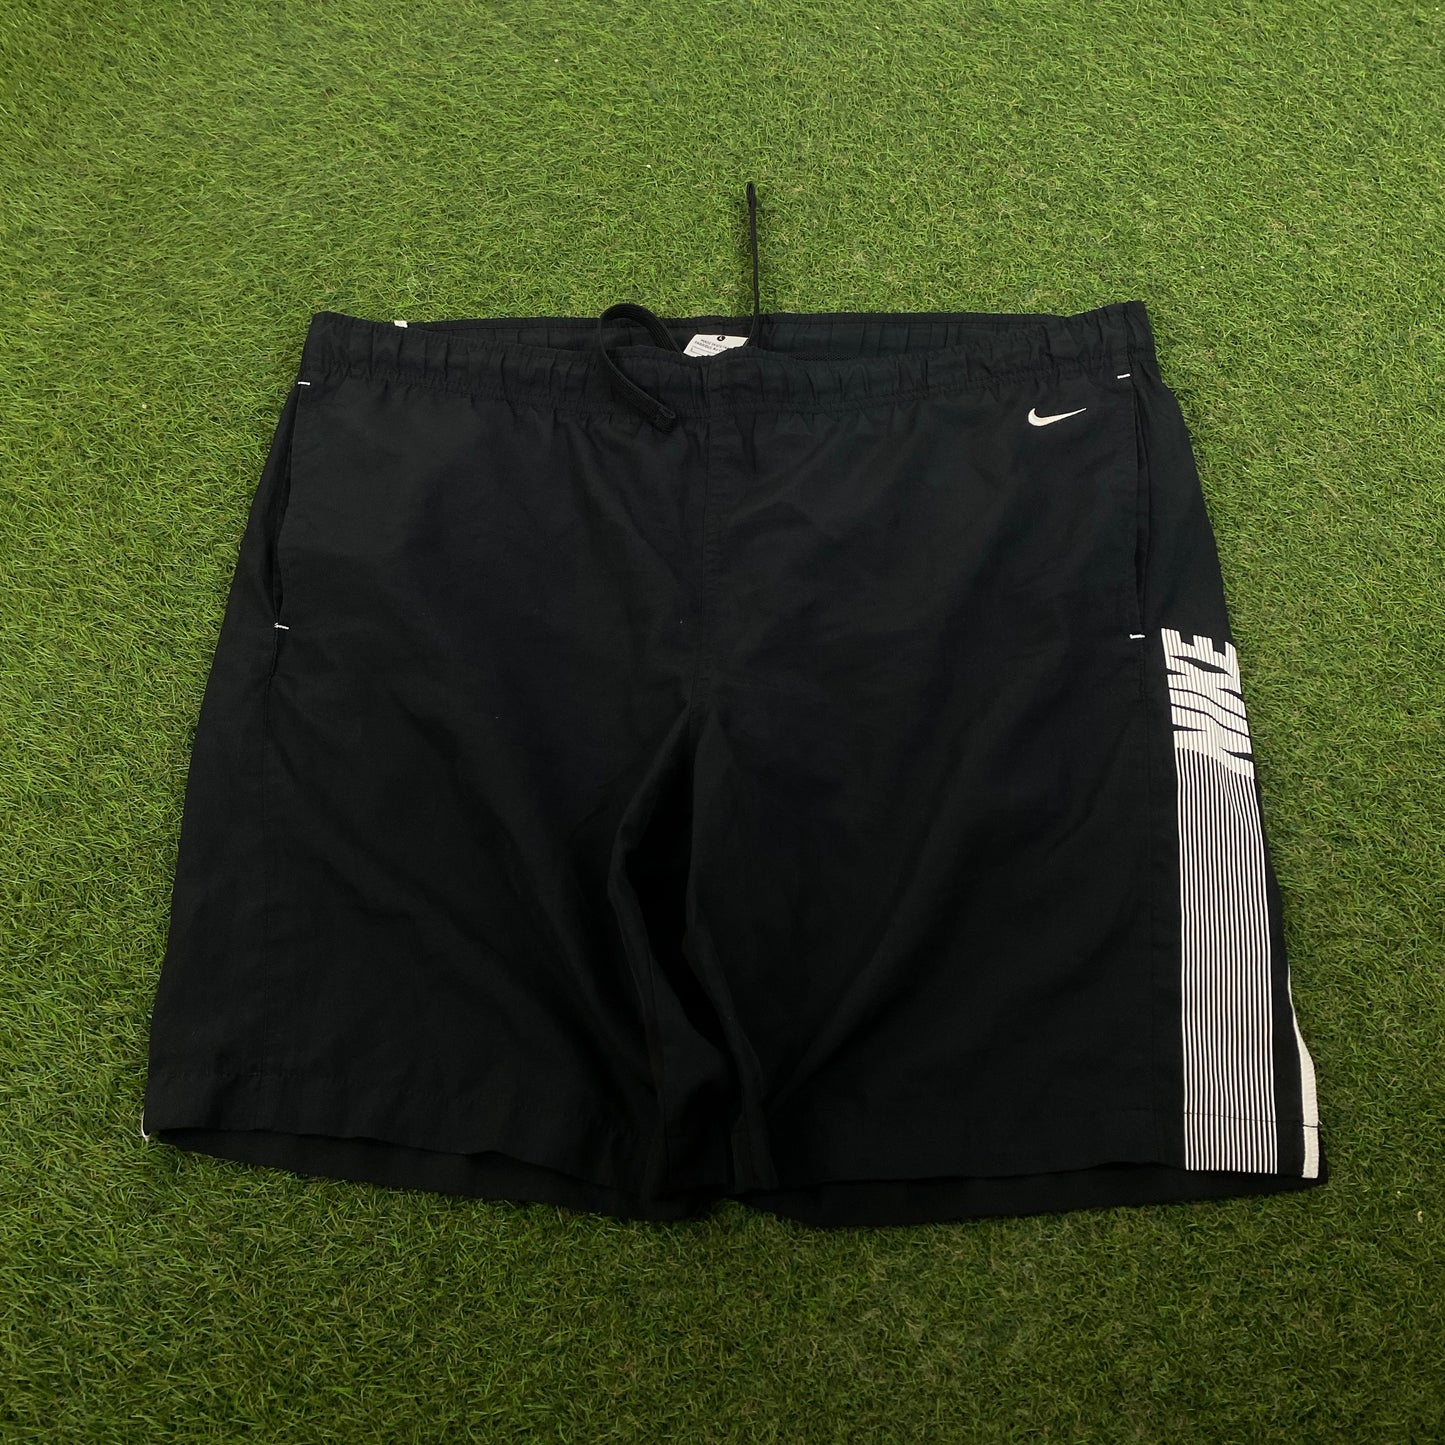 00s Nike Piping Shorts Black Large